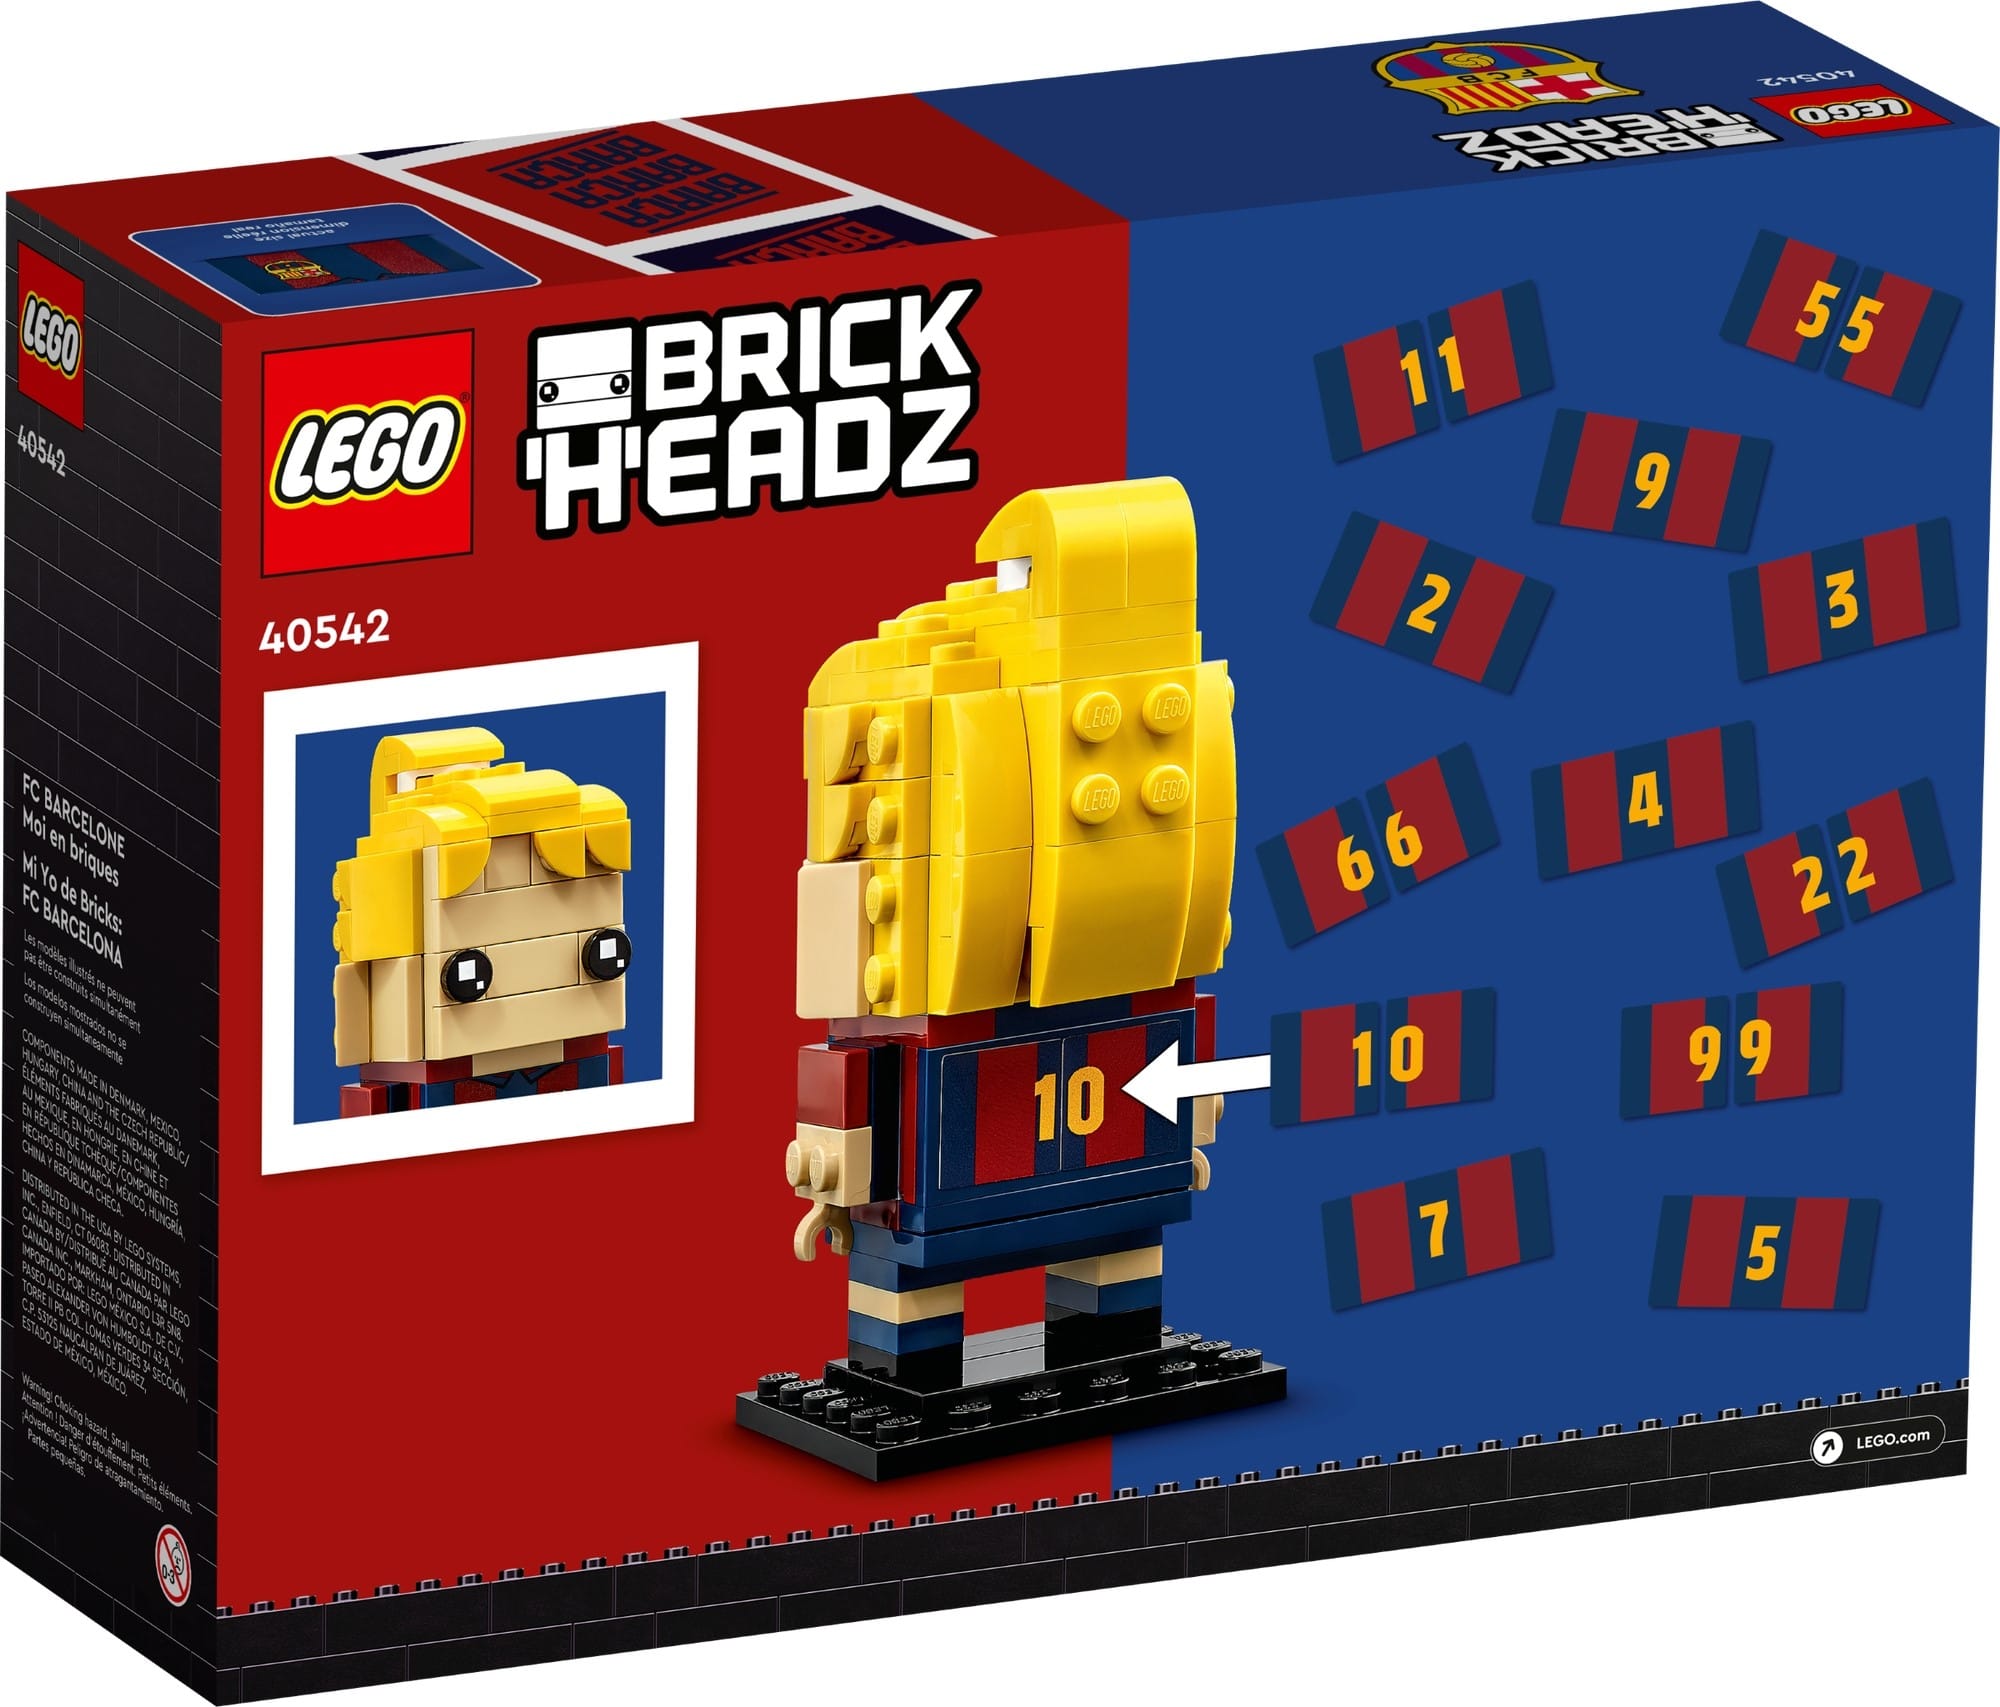 LEGO Brickheadz 40542 Fc Barcelona Go Brick Me 10